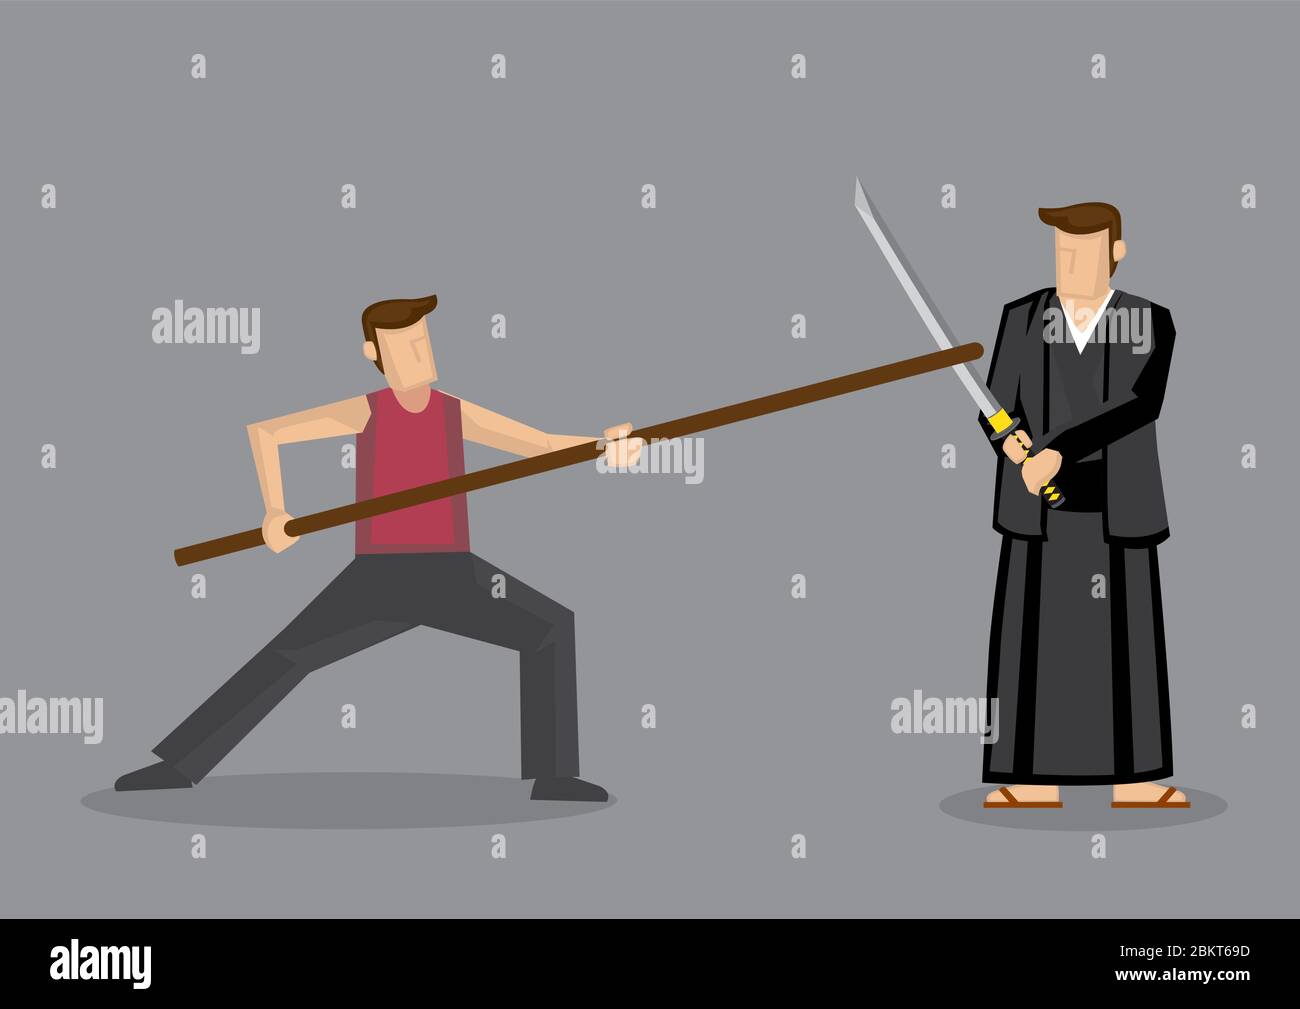 Cartoon vector illustration of man using Chinese staff weapon, long gun, sparring with man in Japanese Kendo uniform using Samurai sword, katana, isol Stock Vector